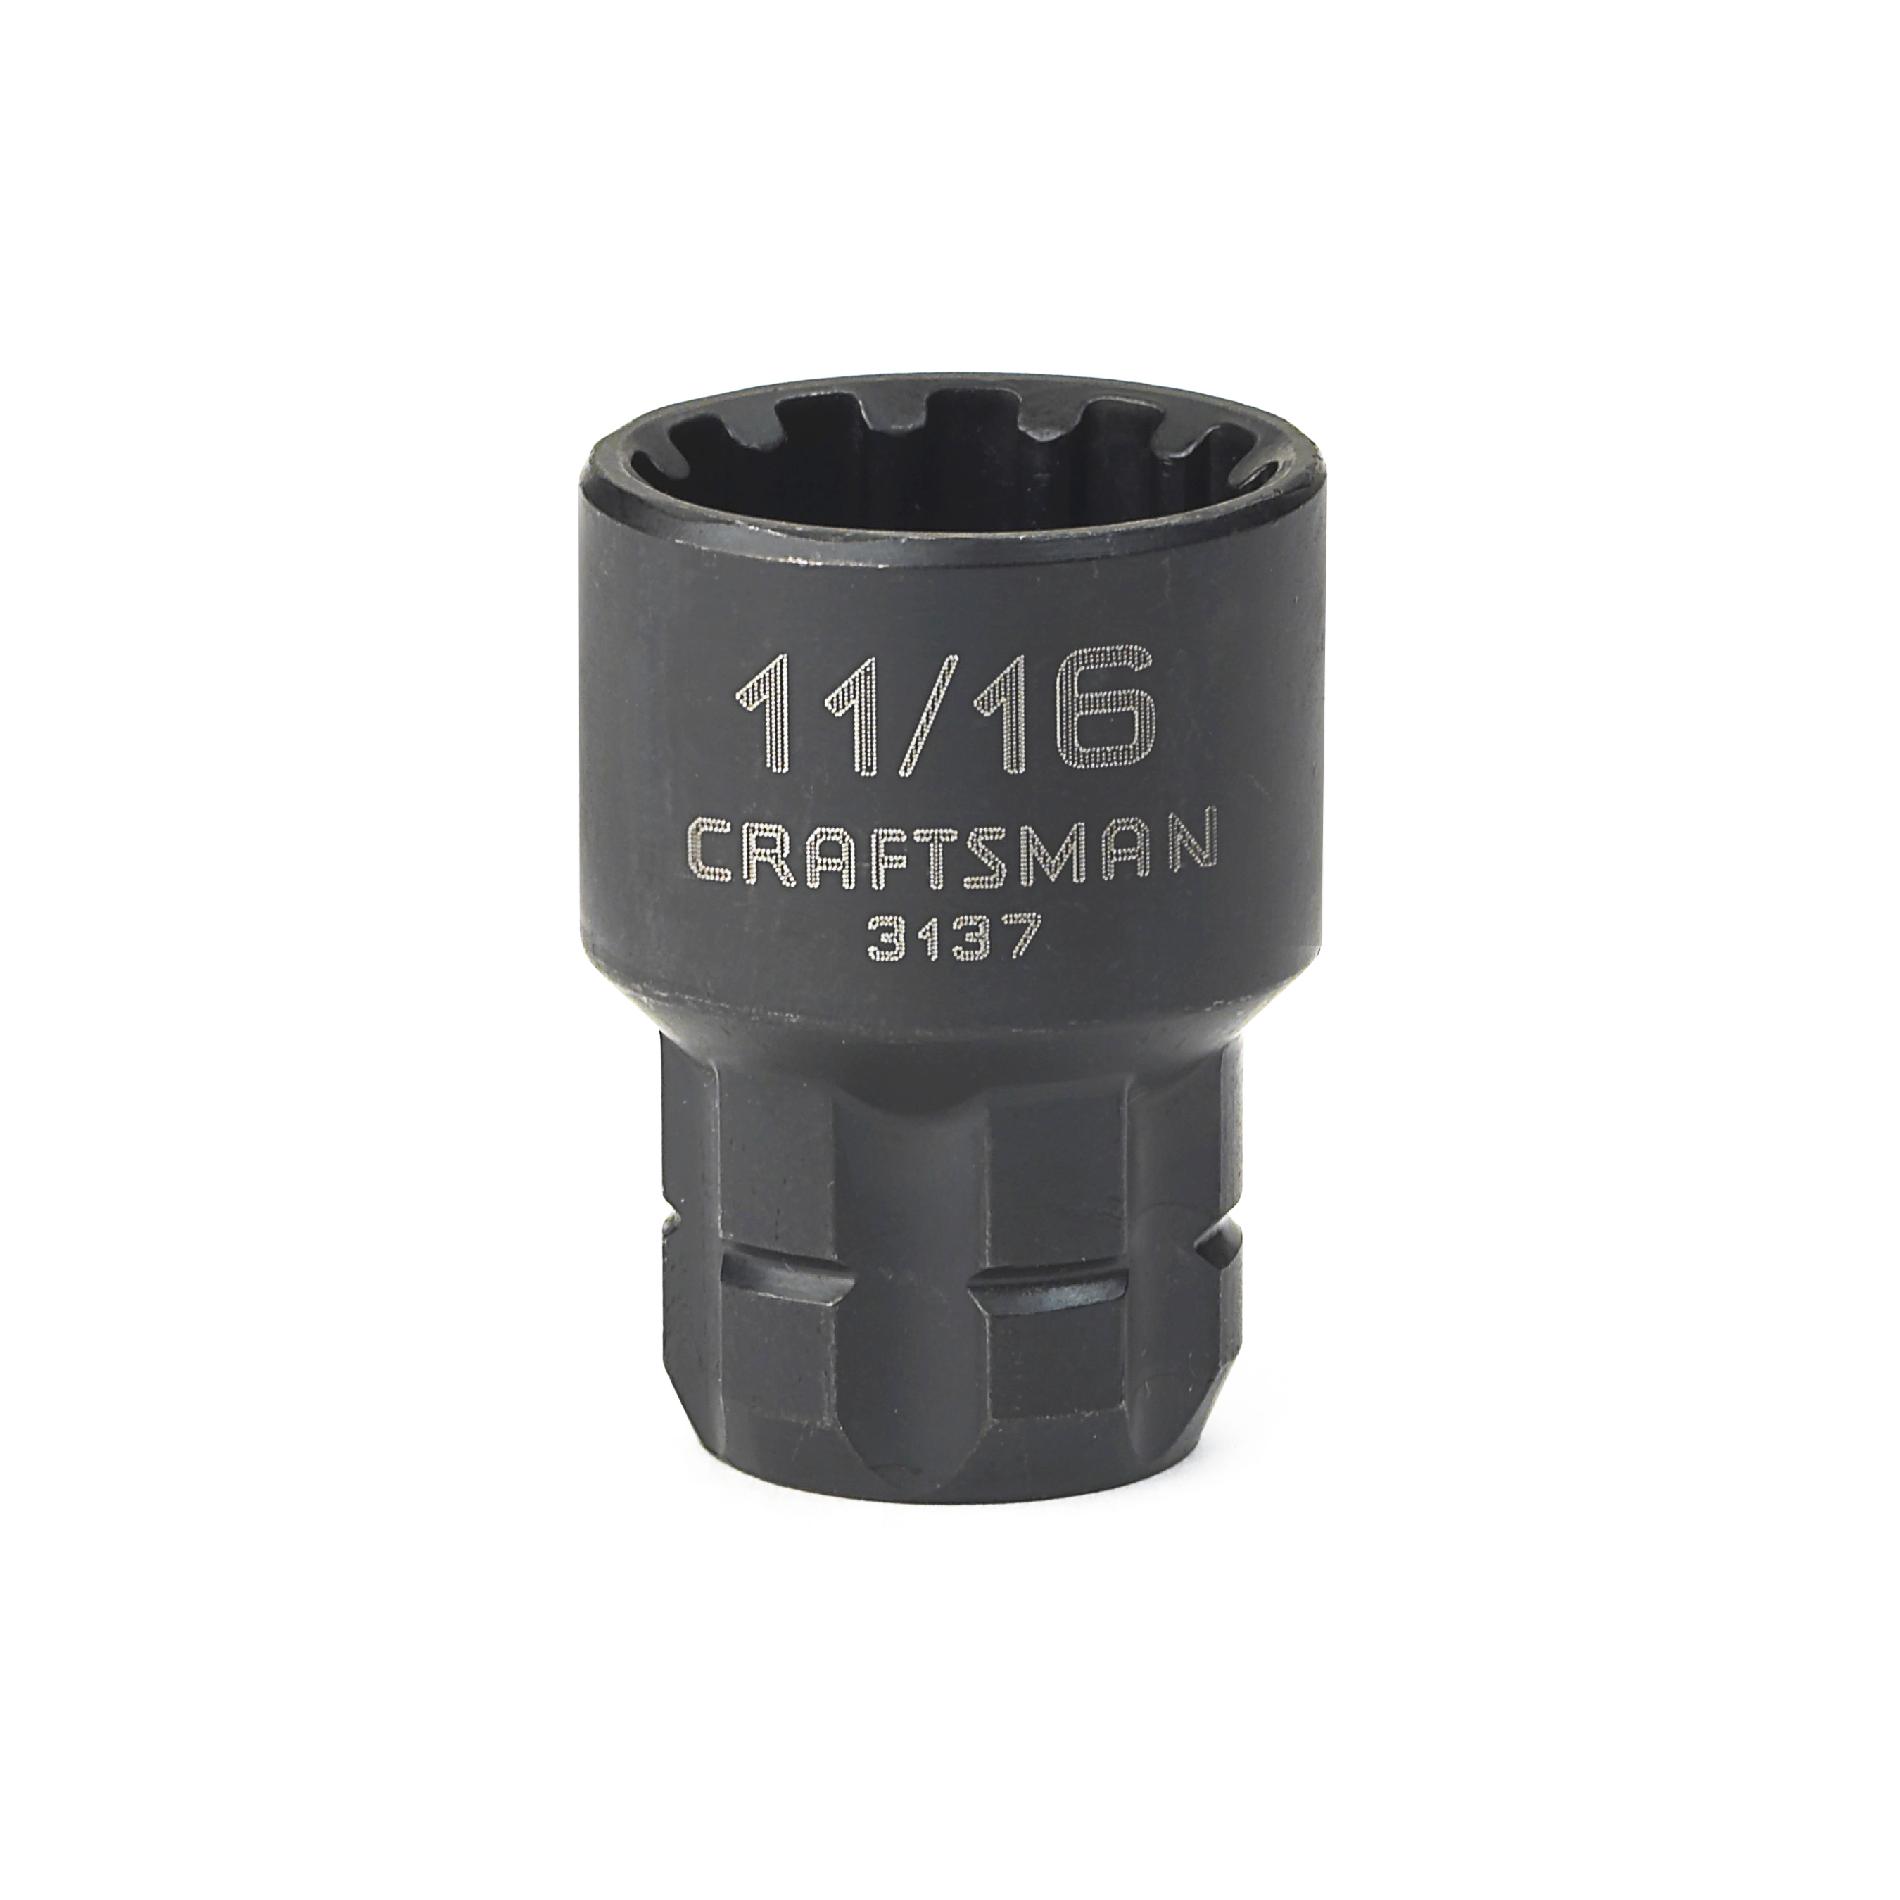 Craftsman 11/16" Universal Max Axess Socket,  3/8-Inch Drive